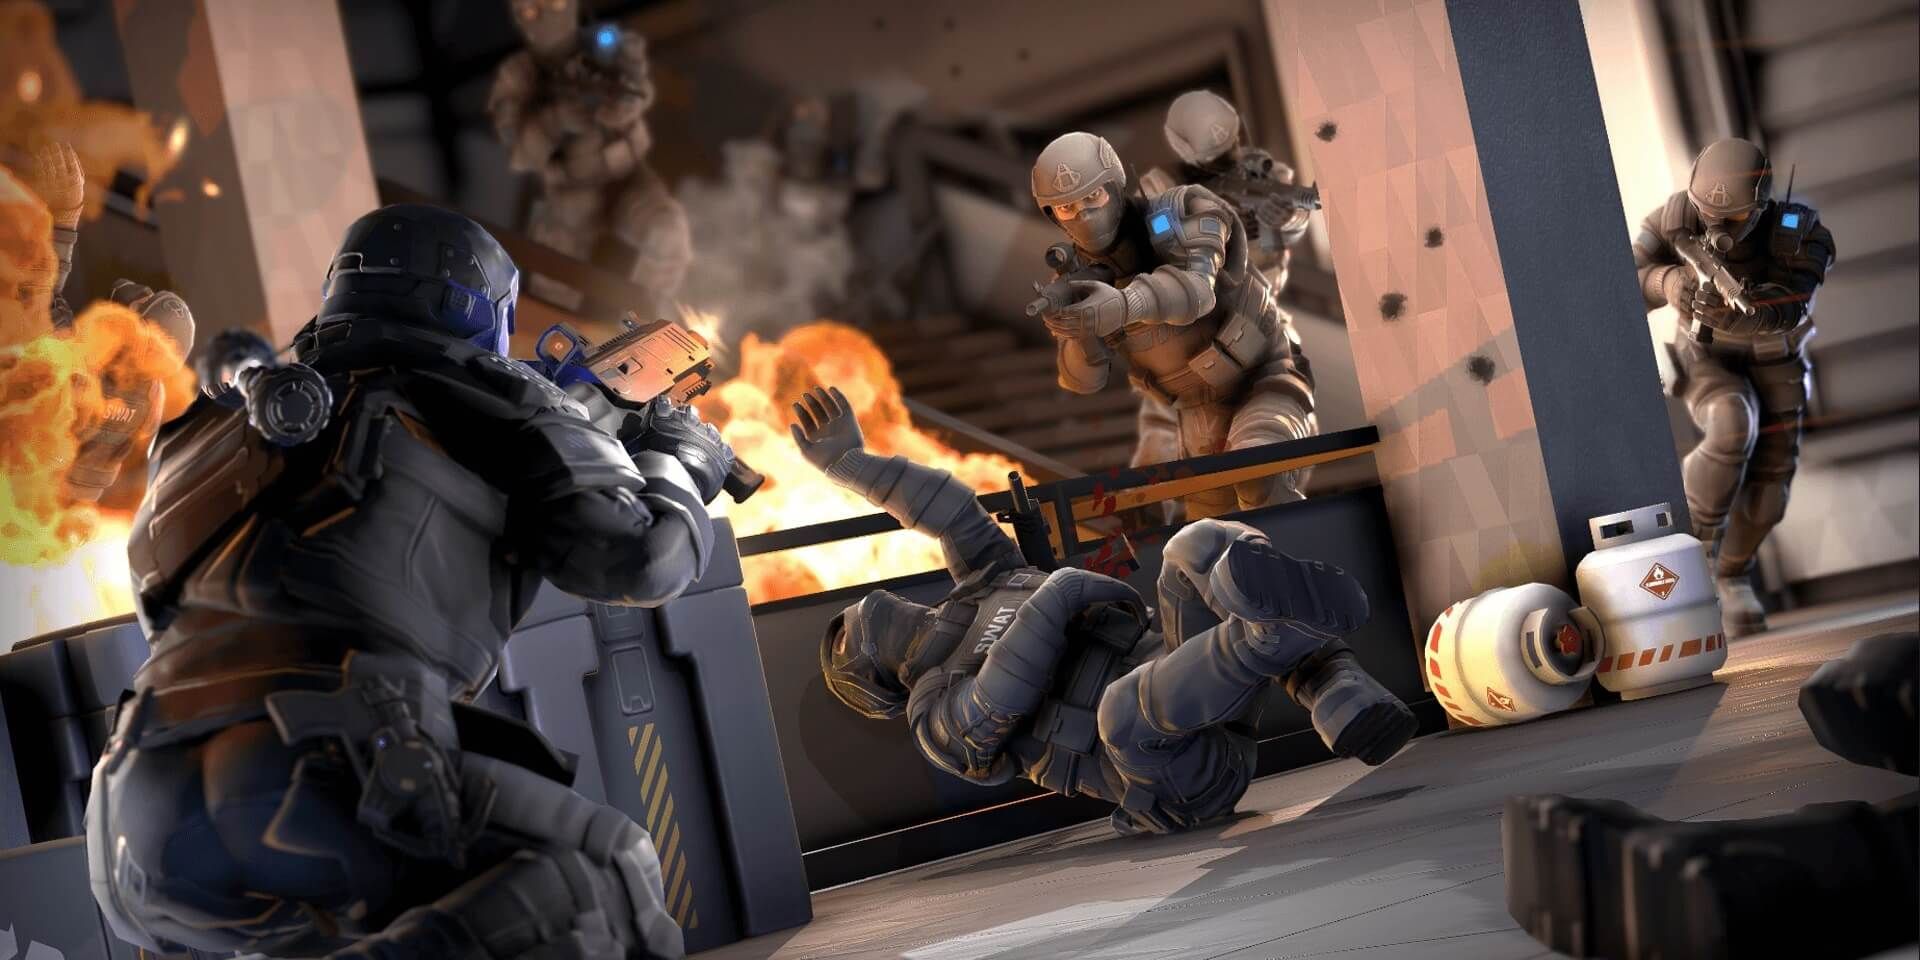 panther vr screenshot gameplay of gunfire exchange